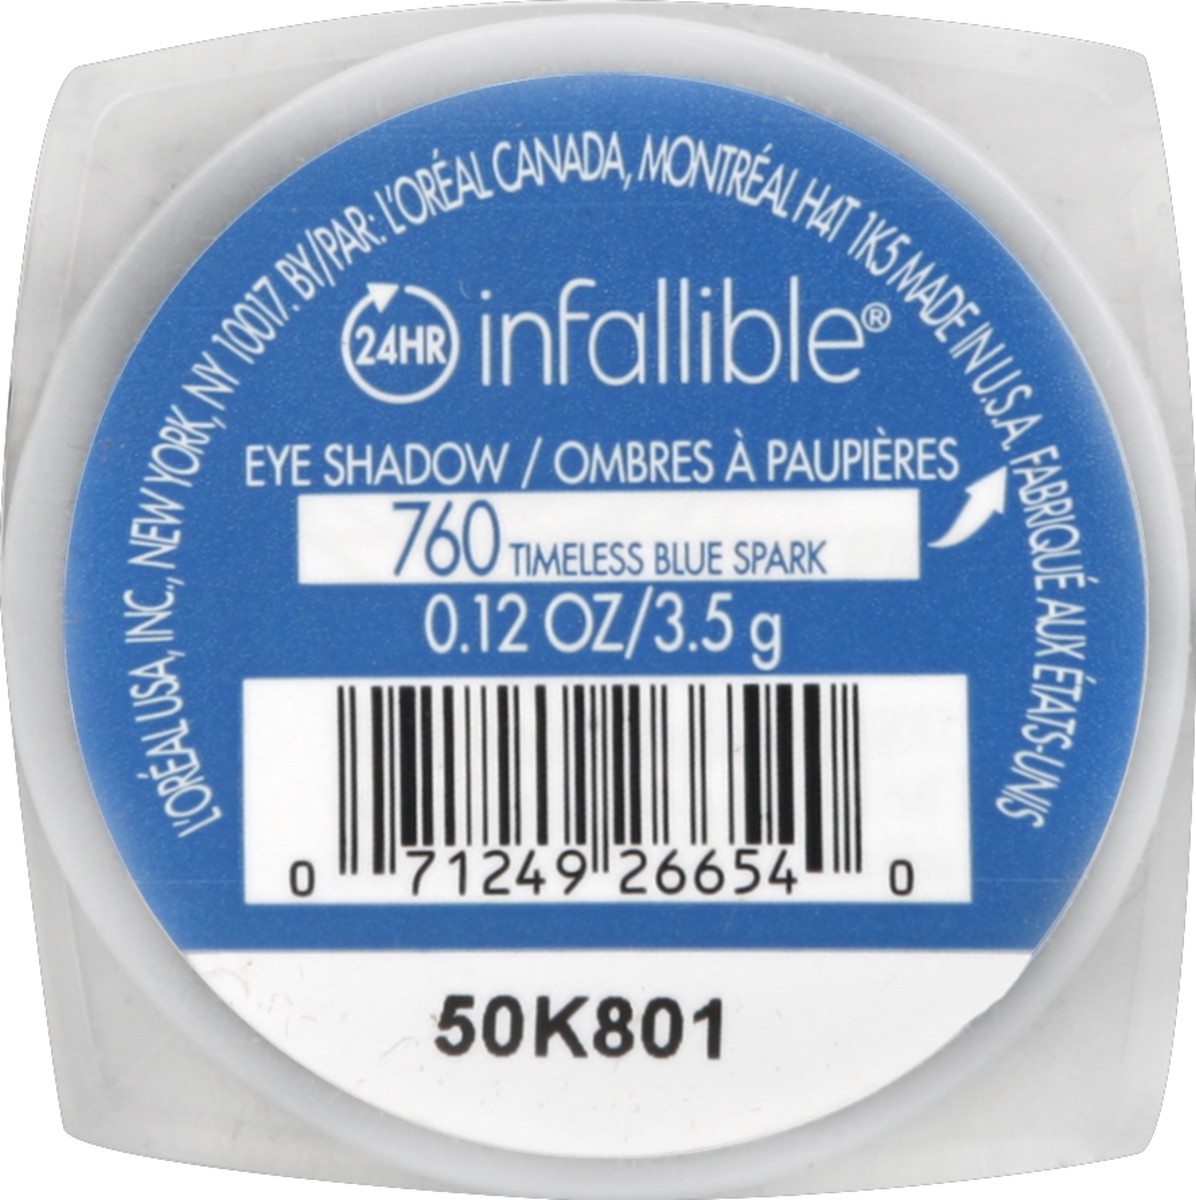 slide 4 of 4, L'Oréal Infallible Eye Shadow 760 Timeless Blue Spark, 0.12 oz